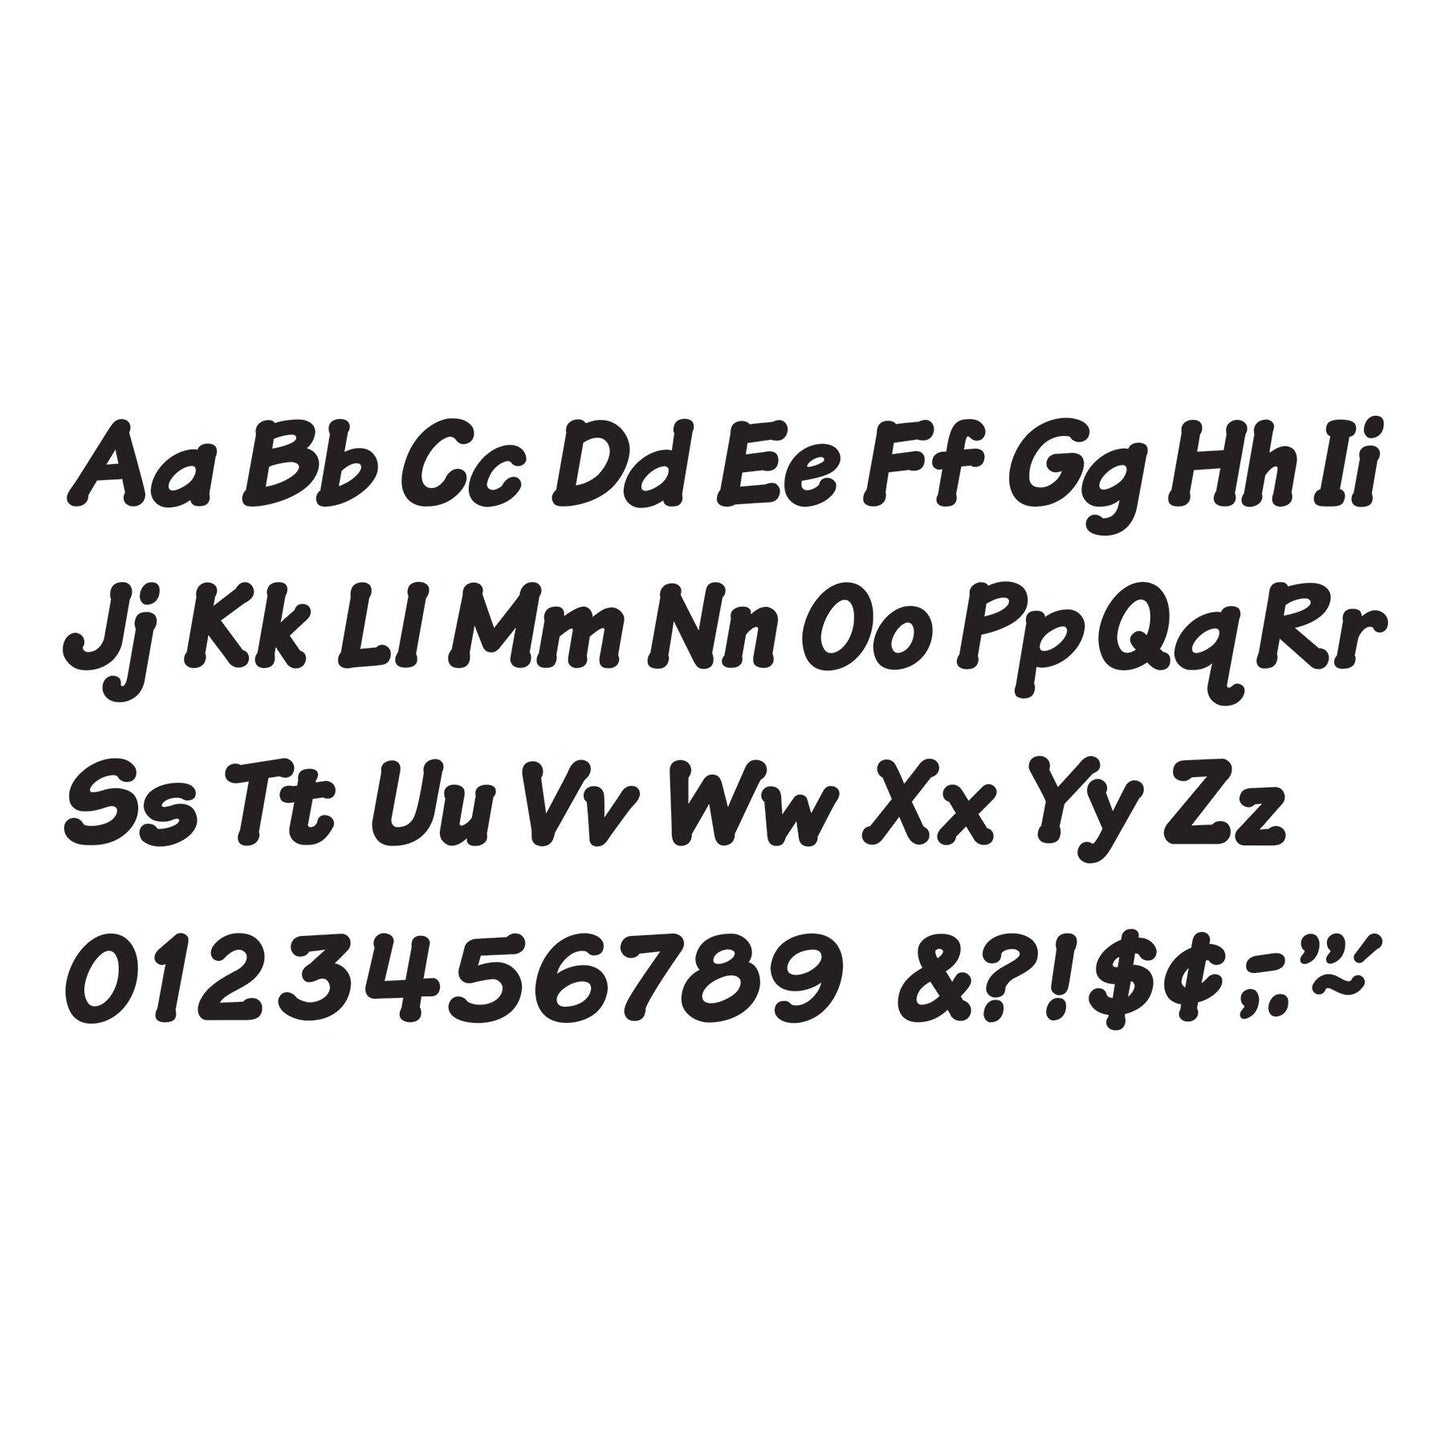 Black 4-Inch Italic Uppercase/Lowercase Combo Pack (EN/SP) Ready Letters®, 193 Per Pack, 3 Packs - Loomini